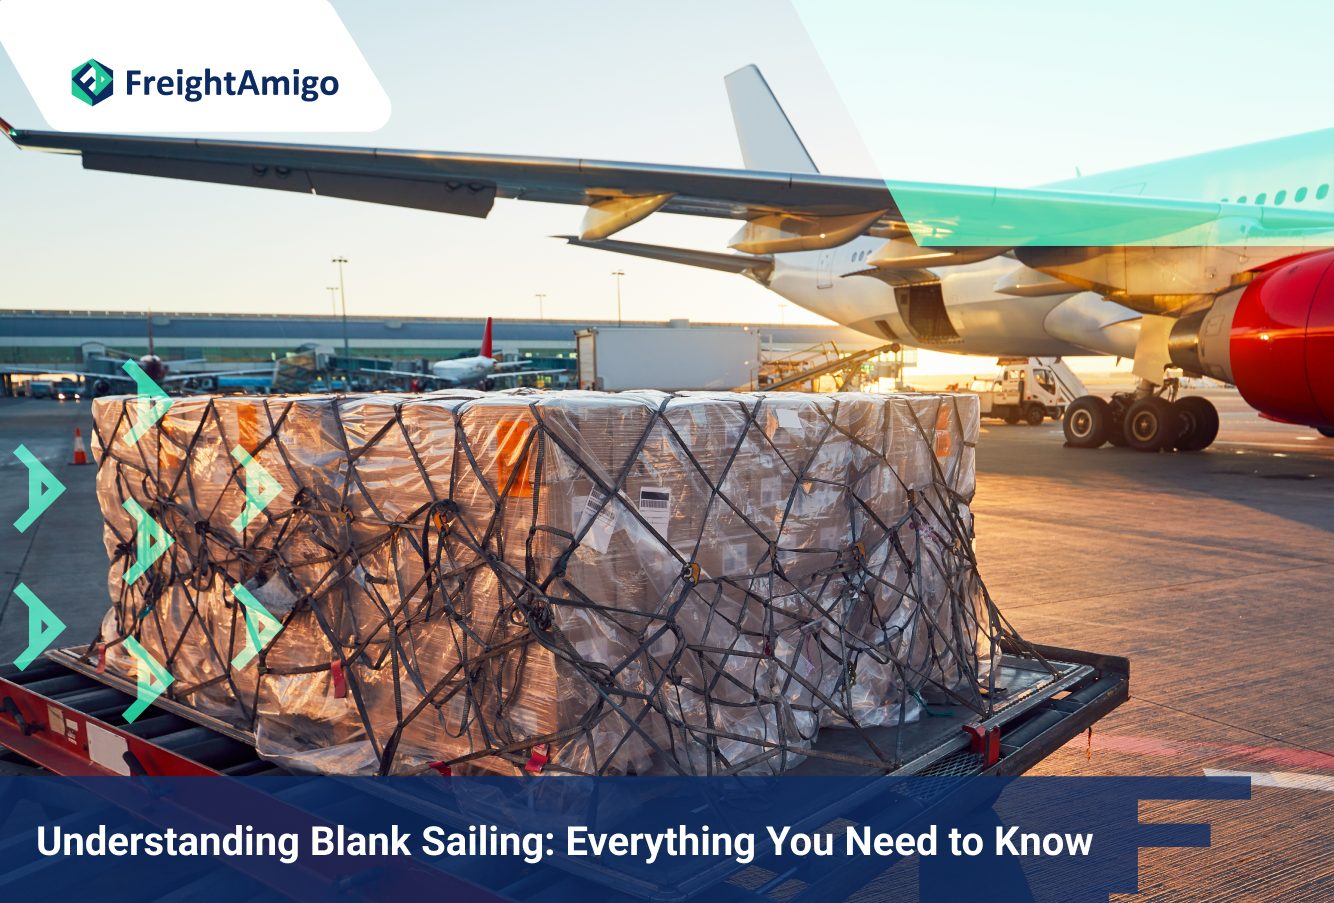 Understanding what is Blank Sailing